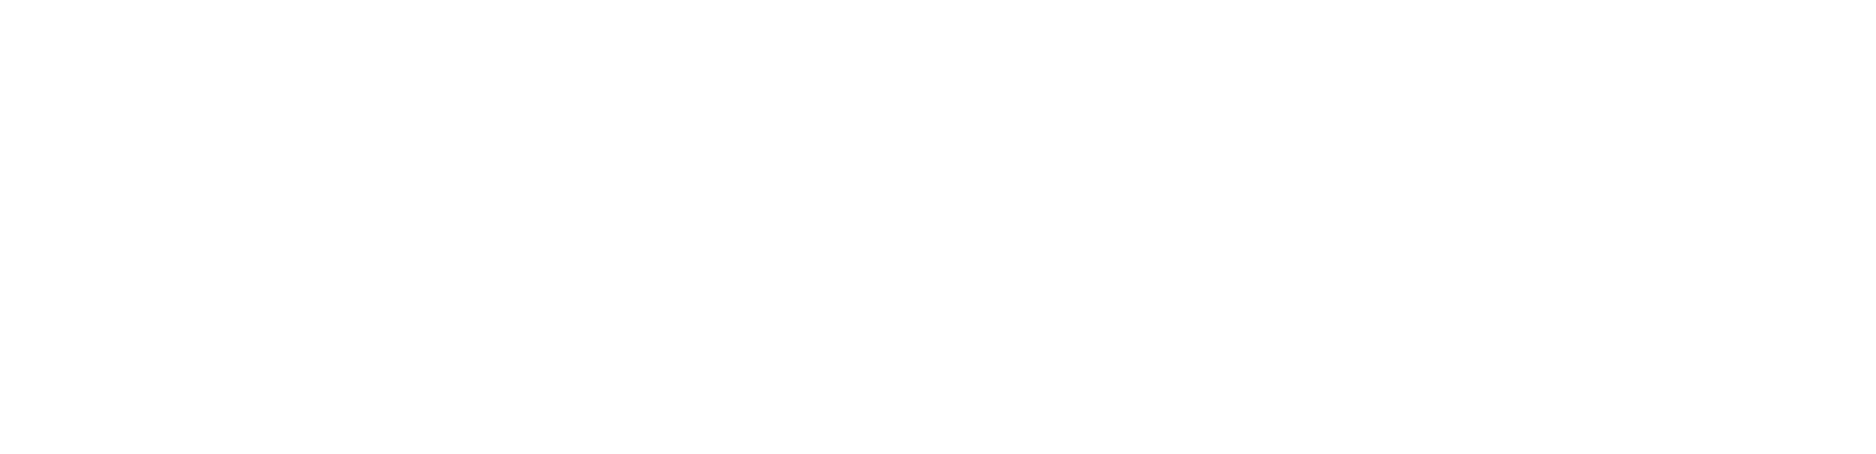 Wish Night West Texas Logo